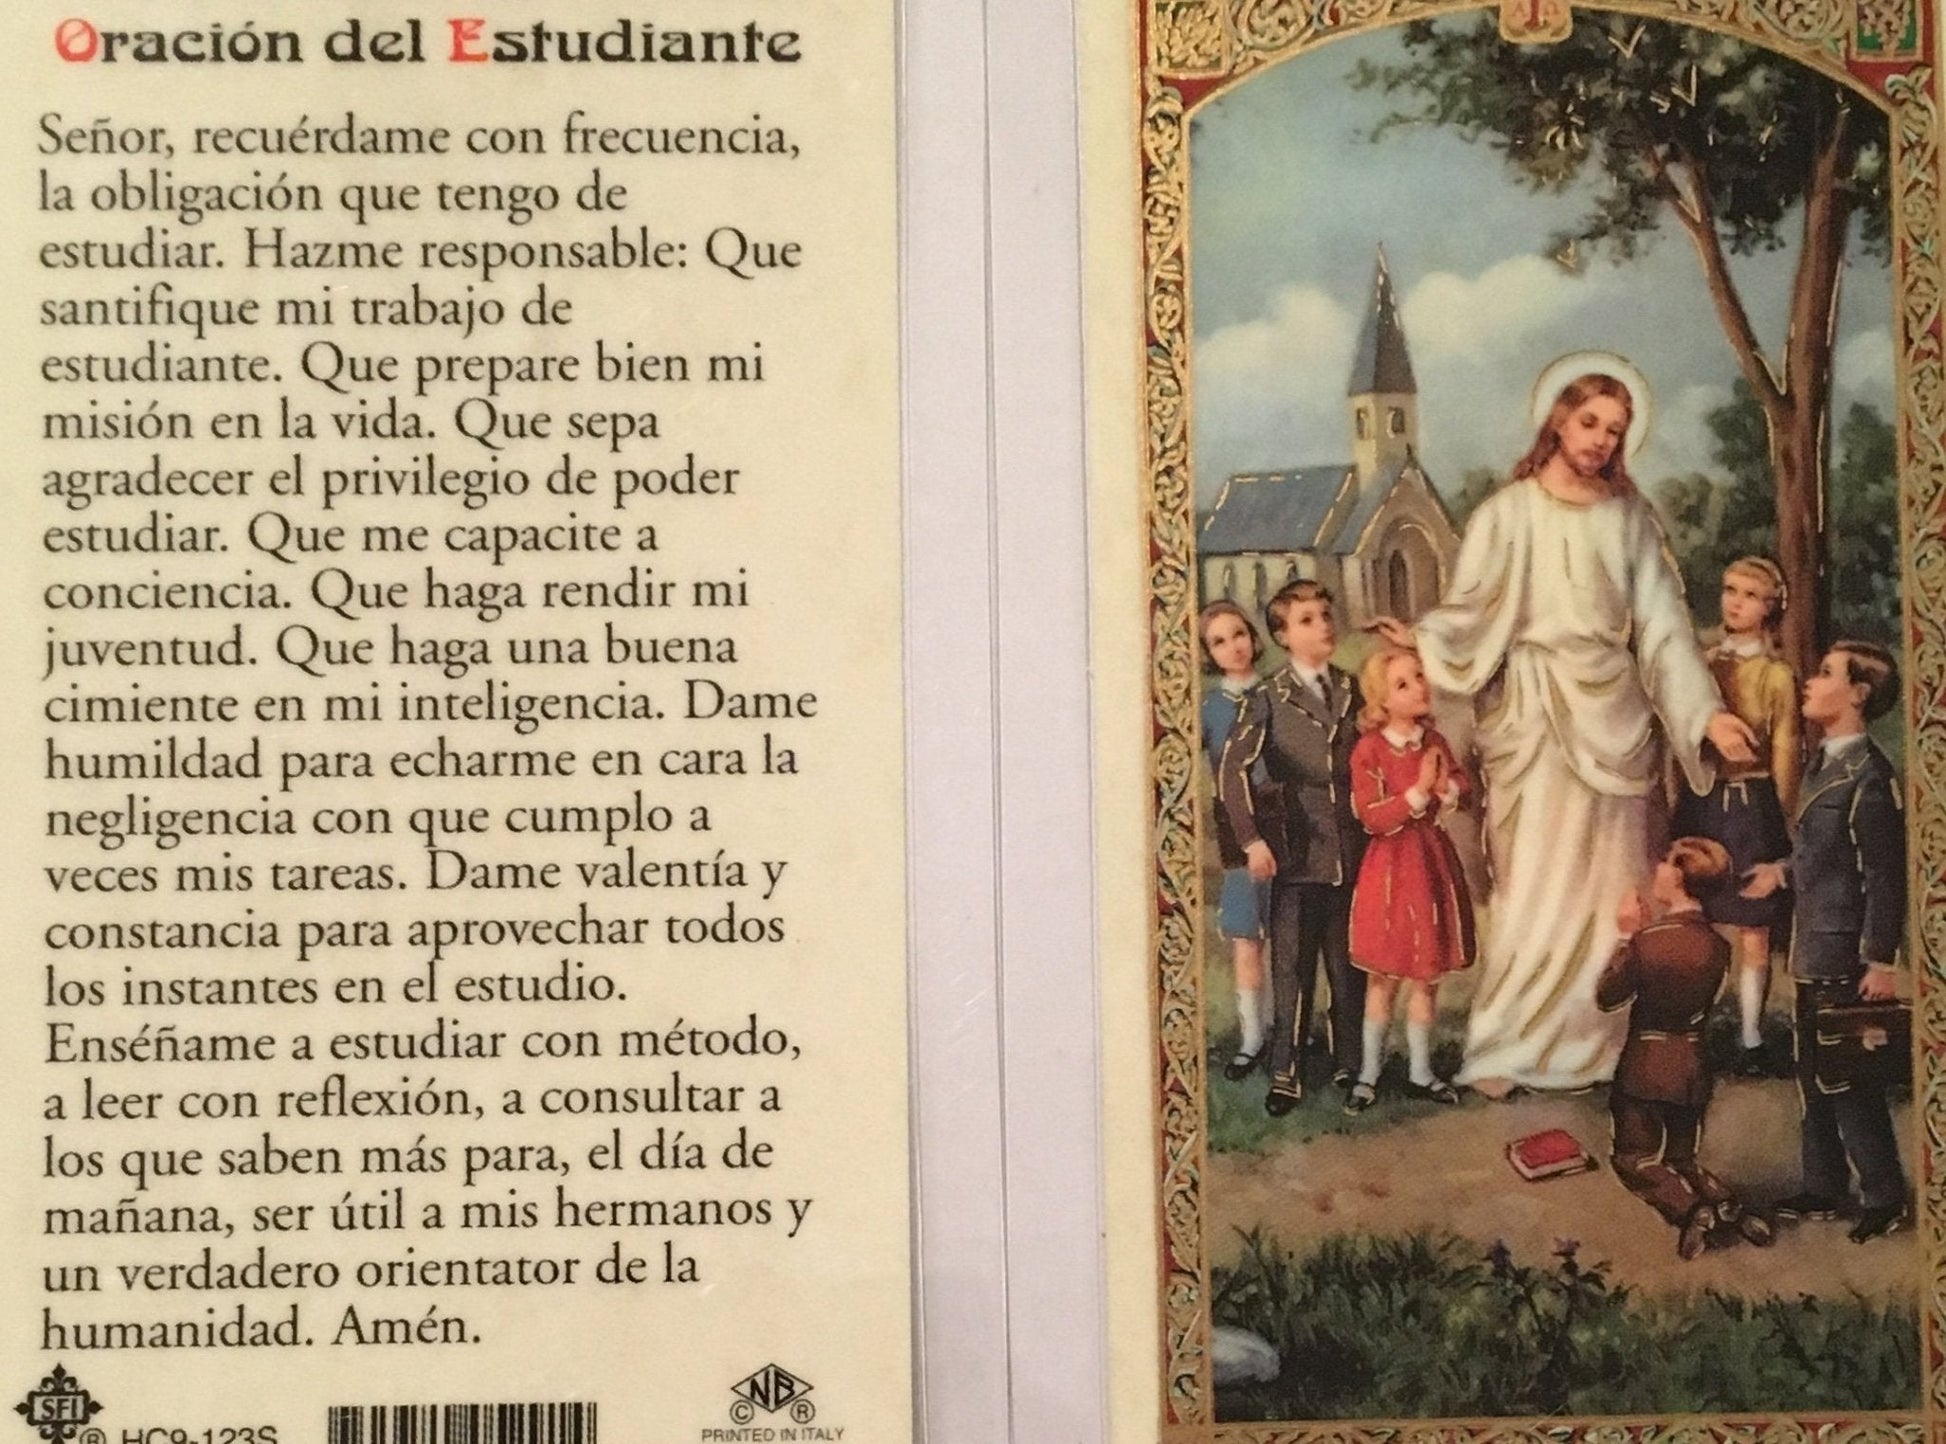 Prayer Card Oracion Del Estudiante SPANISH Laminated HC9-123S - Ysleta Mission Gift Shop- VOTED El Paso's Best Gift Shop